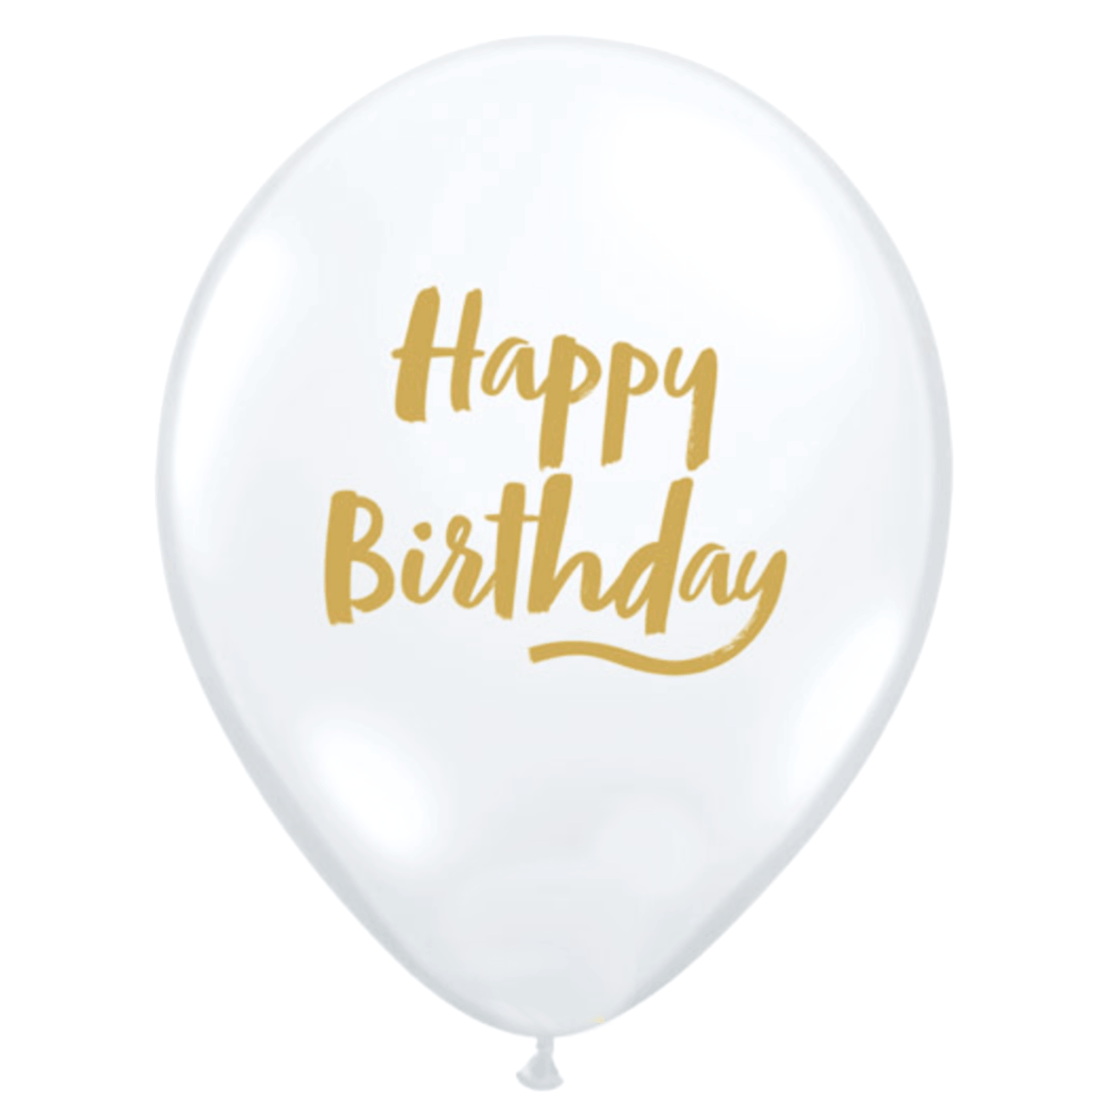 Happy Birthday Balloons | Birthday Party Supplies | Online Balloonery Qualatex